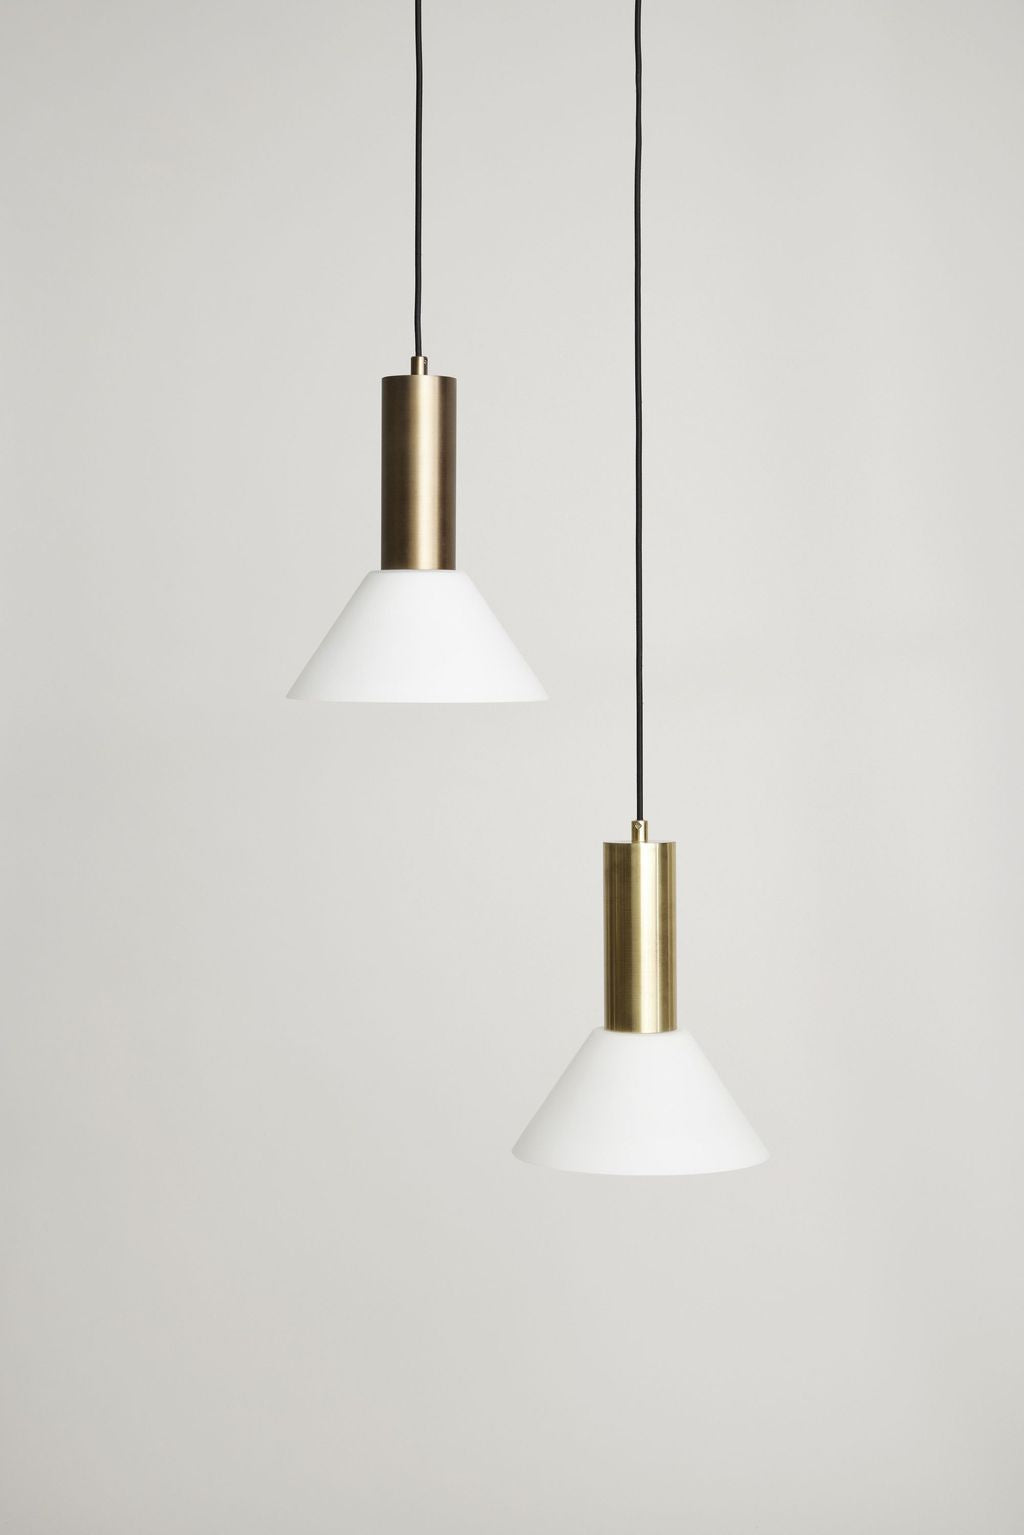 Hübsch Contrast Pendant /Ceiling Lamp, Burnished Brass